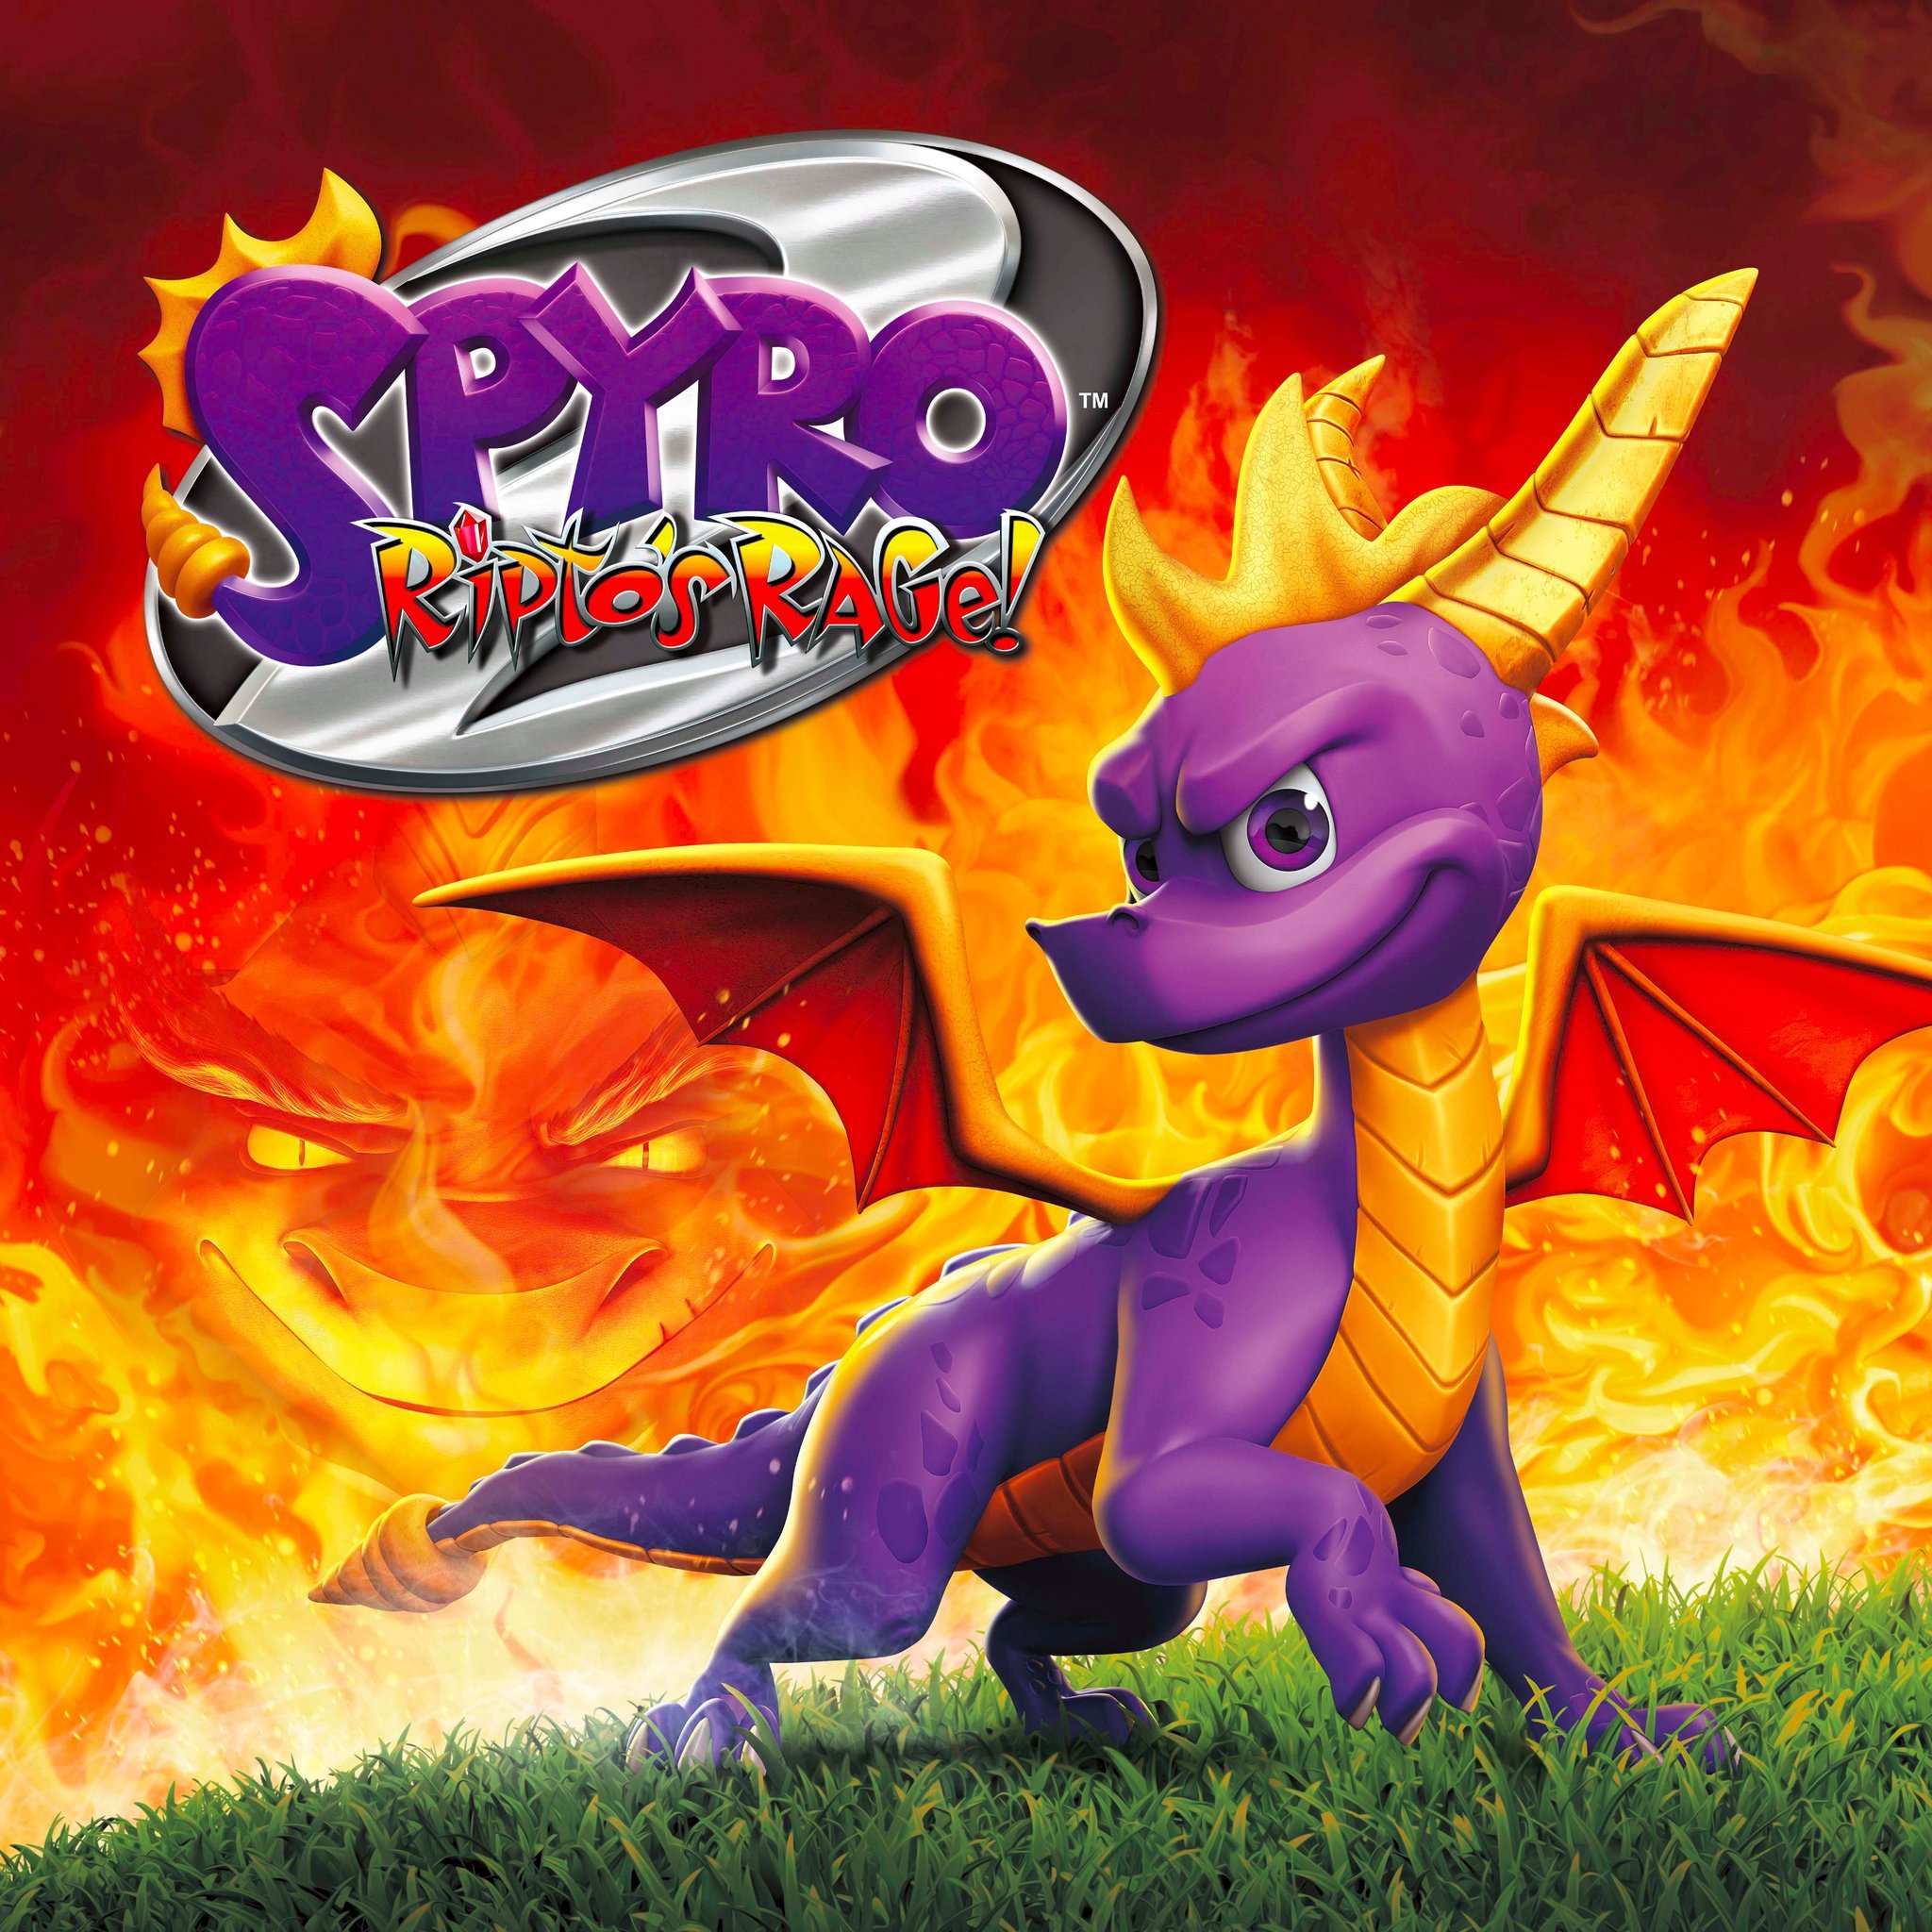 ps4 games like spyro the dragon